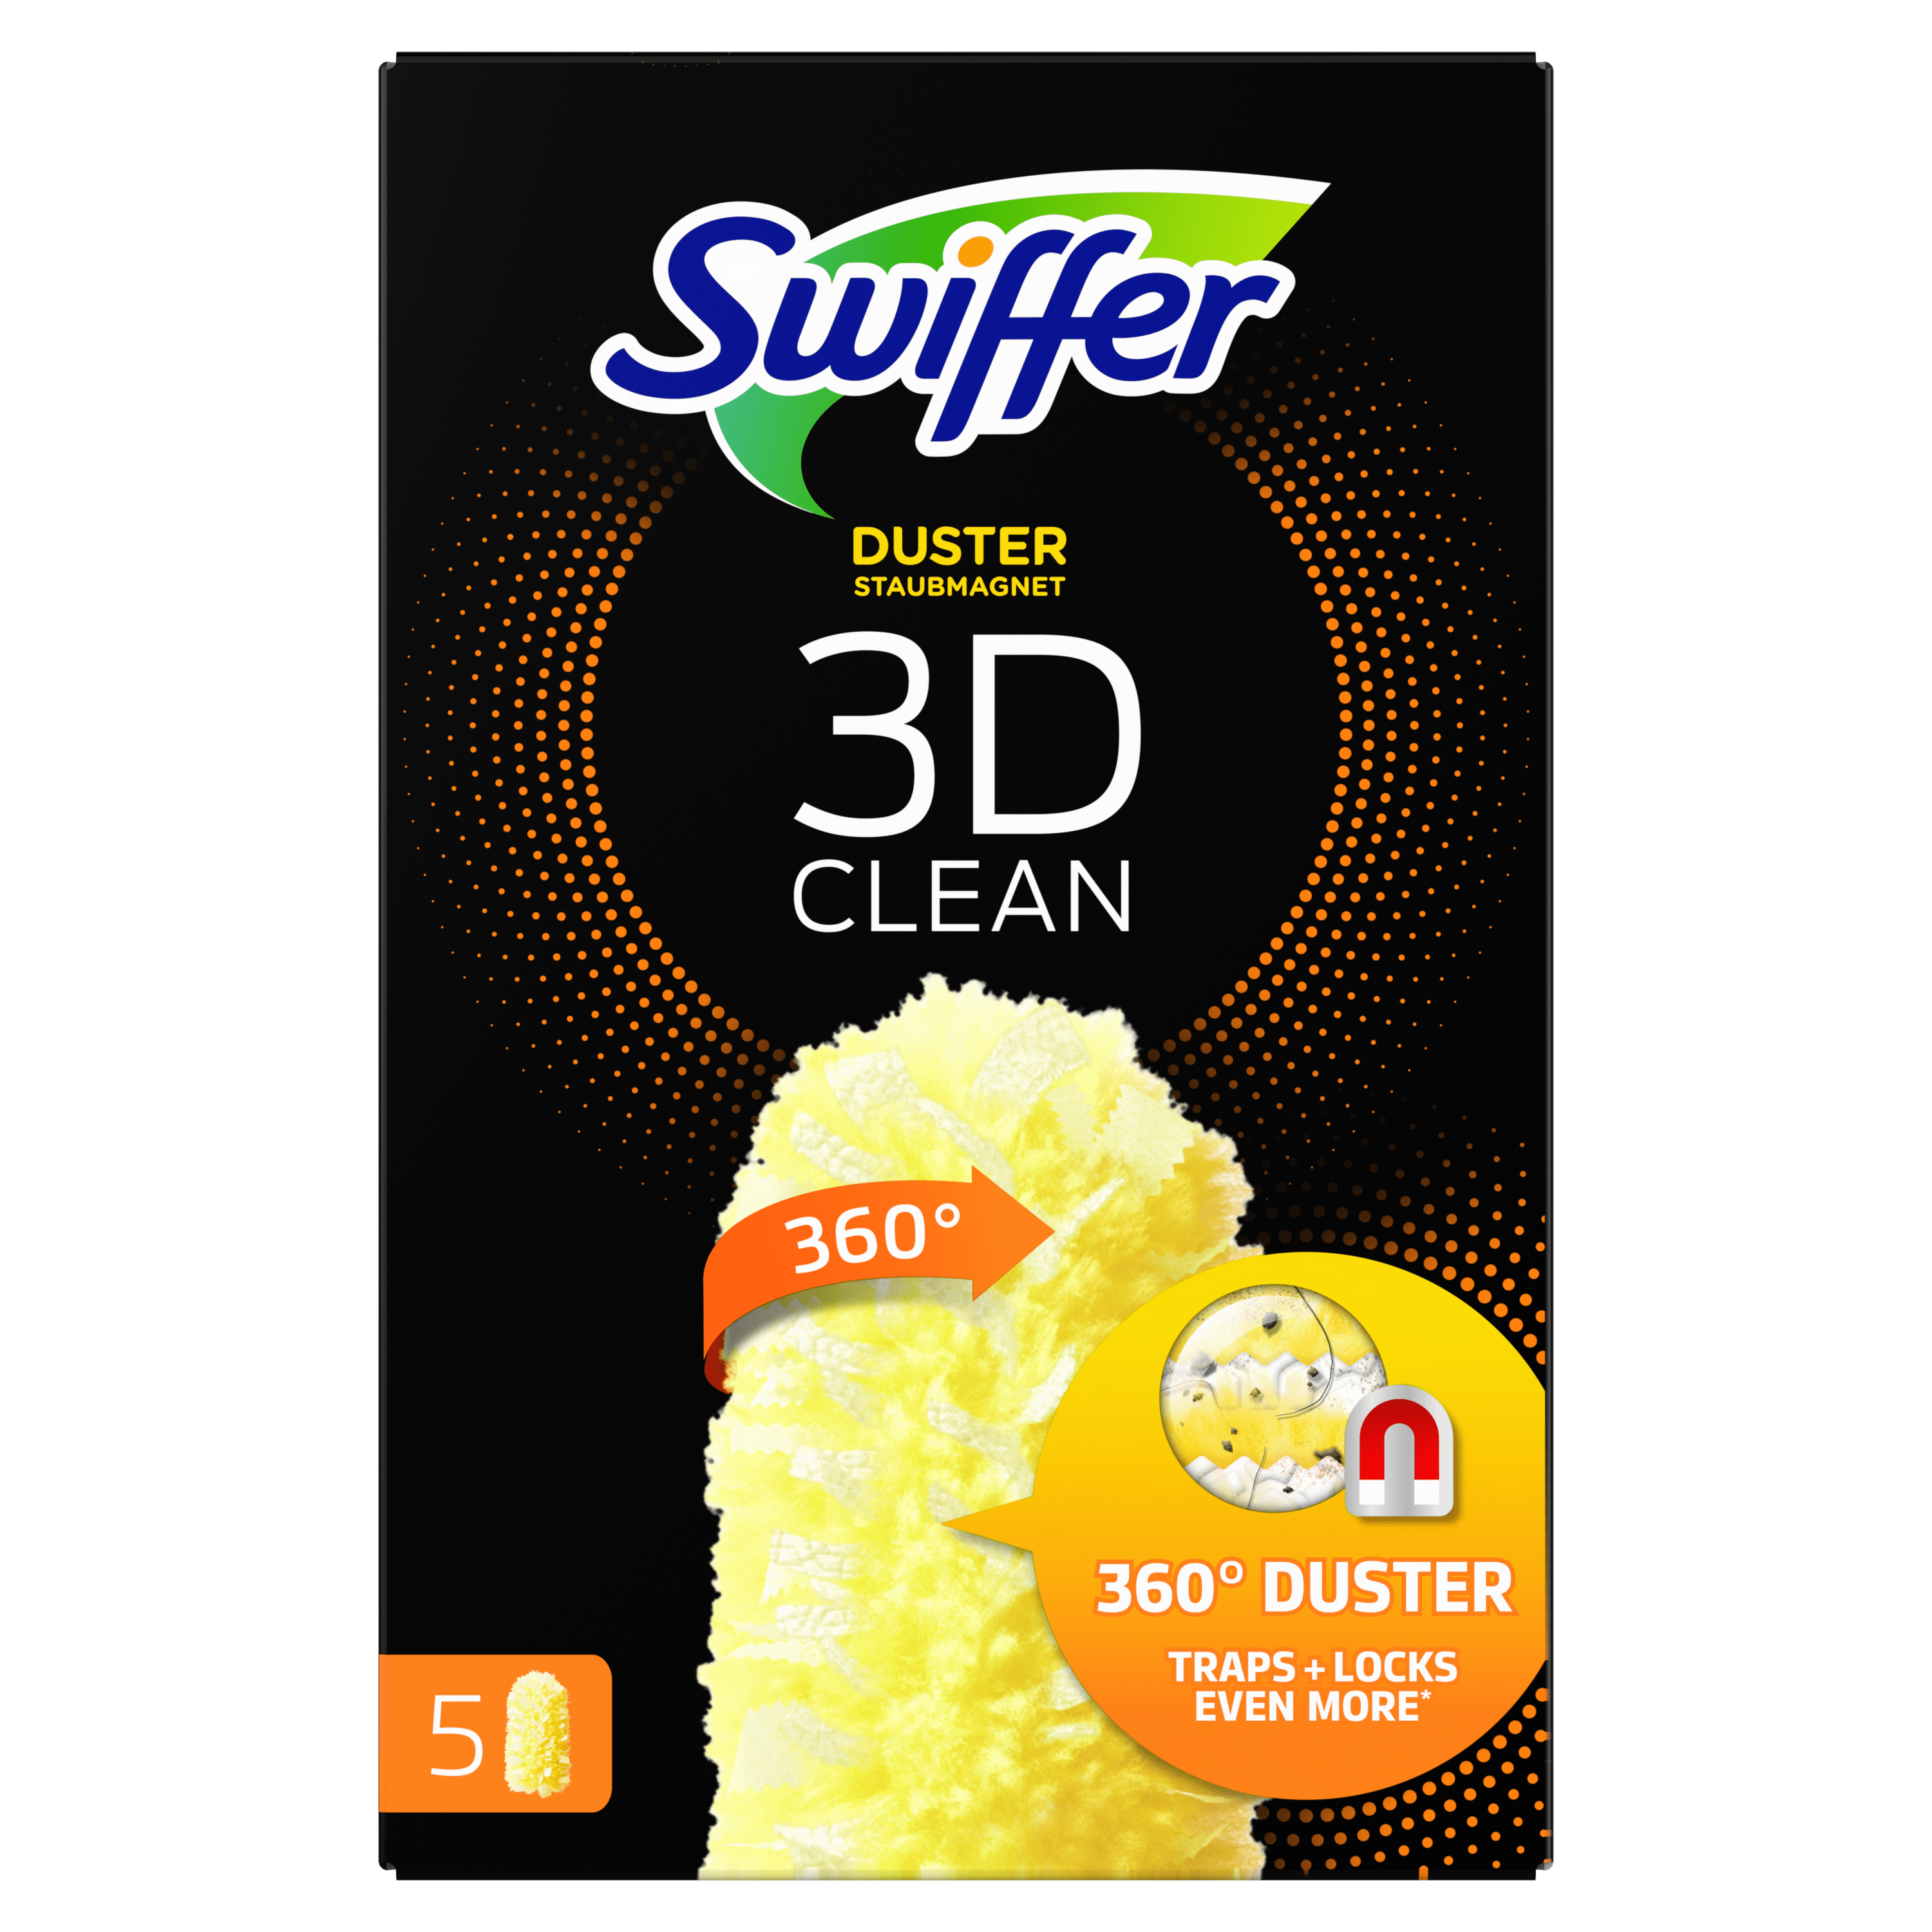 Recharge Plumeau Swiffer 3D Clean